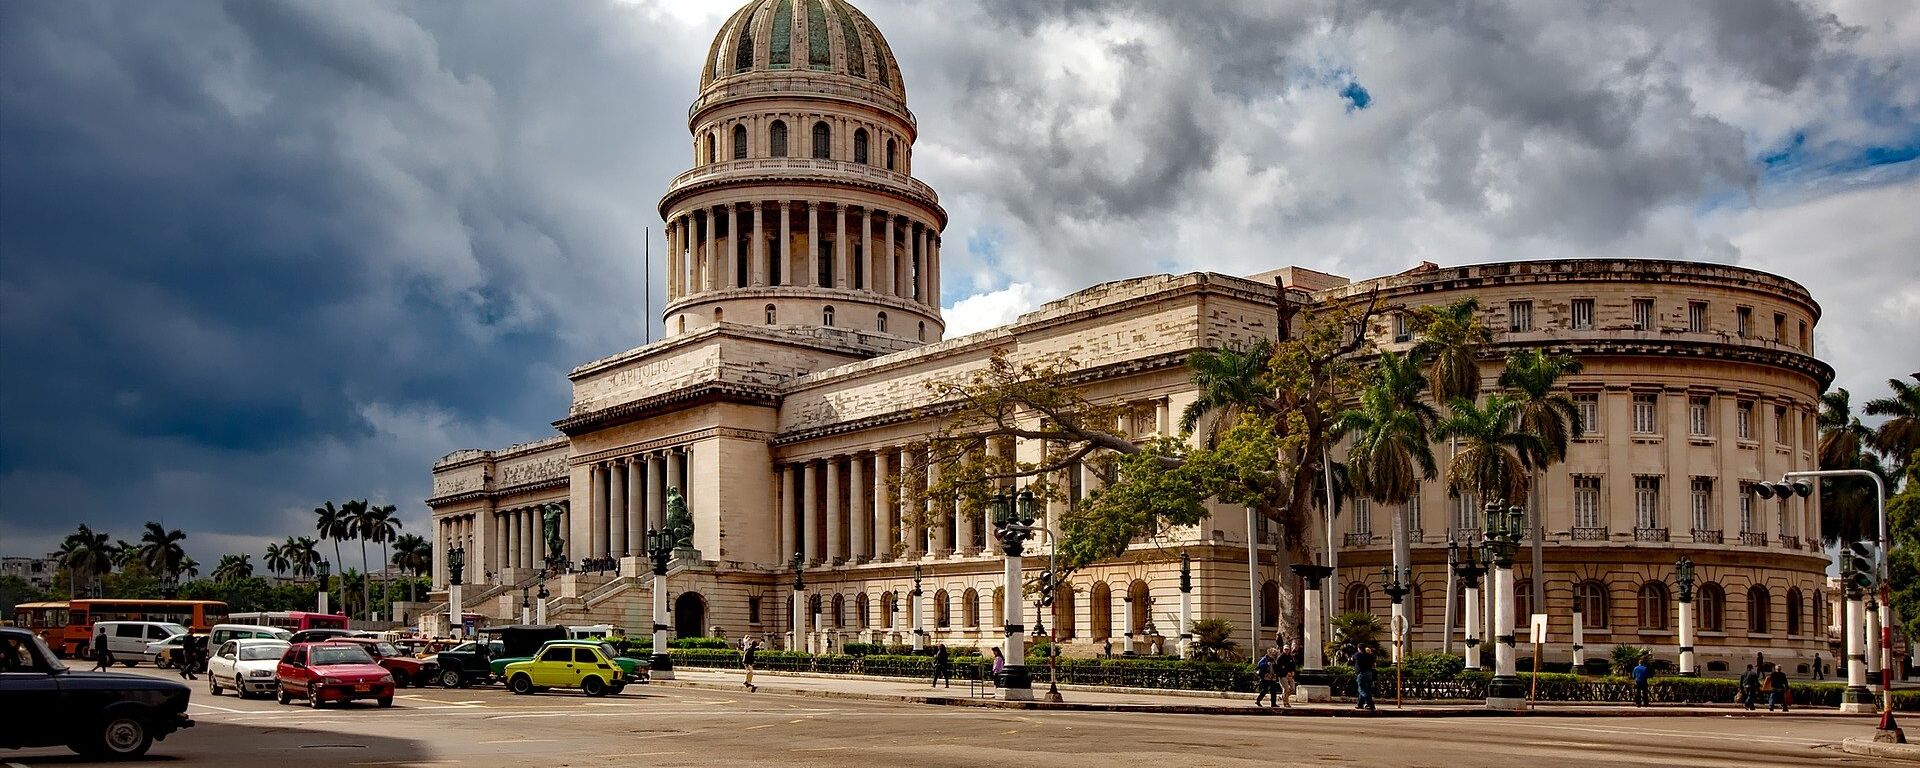 Edificio del Capitolio en La Habana (Cuba) - Sputnik Mundo, 1920, 24.01.2020